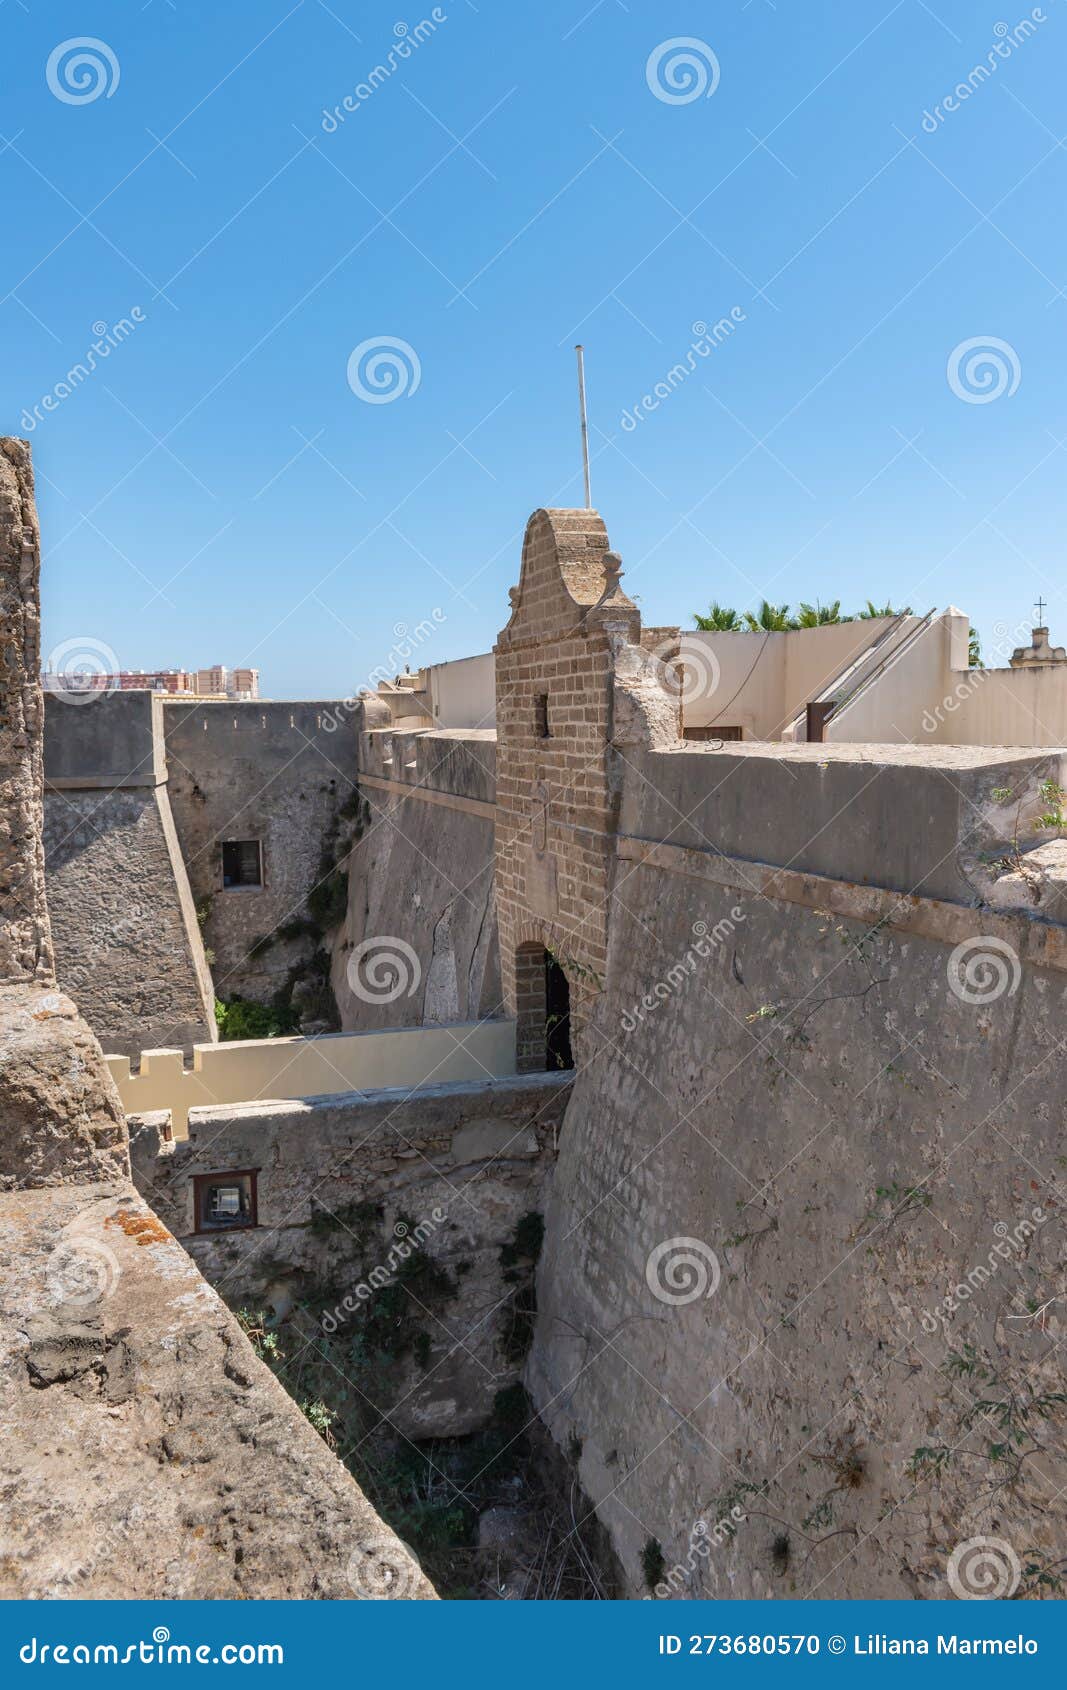 walls and entrance moat at santa catalina castle, cÃ¡diz spain